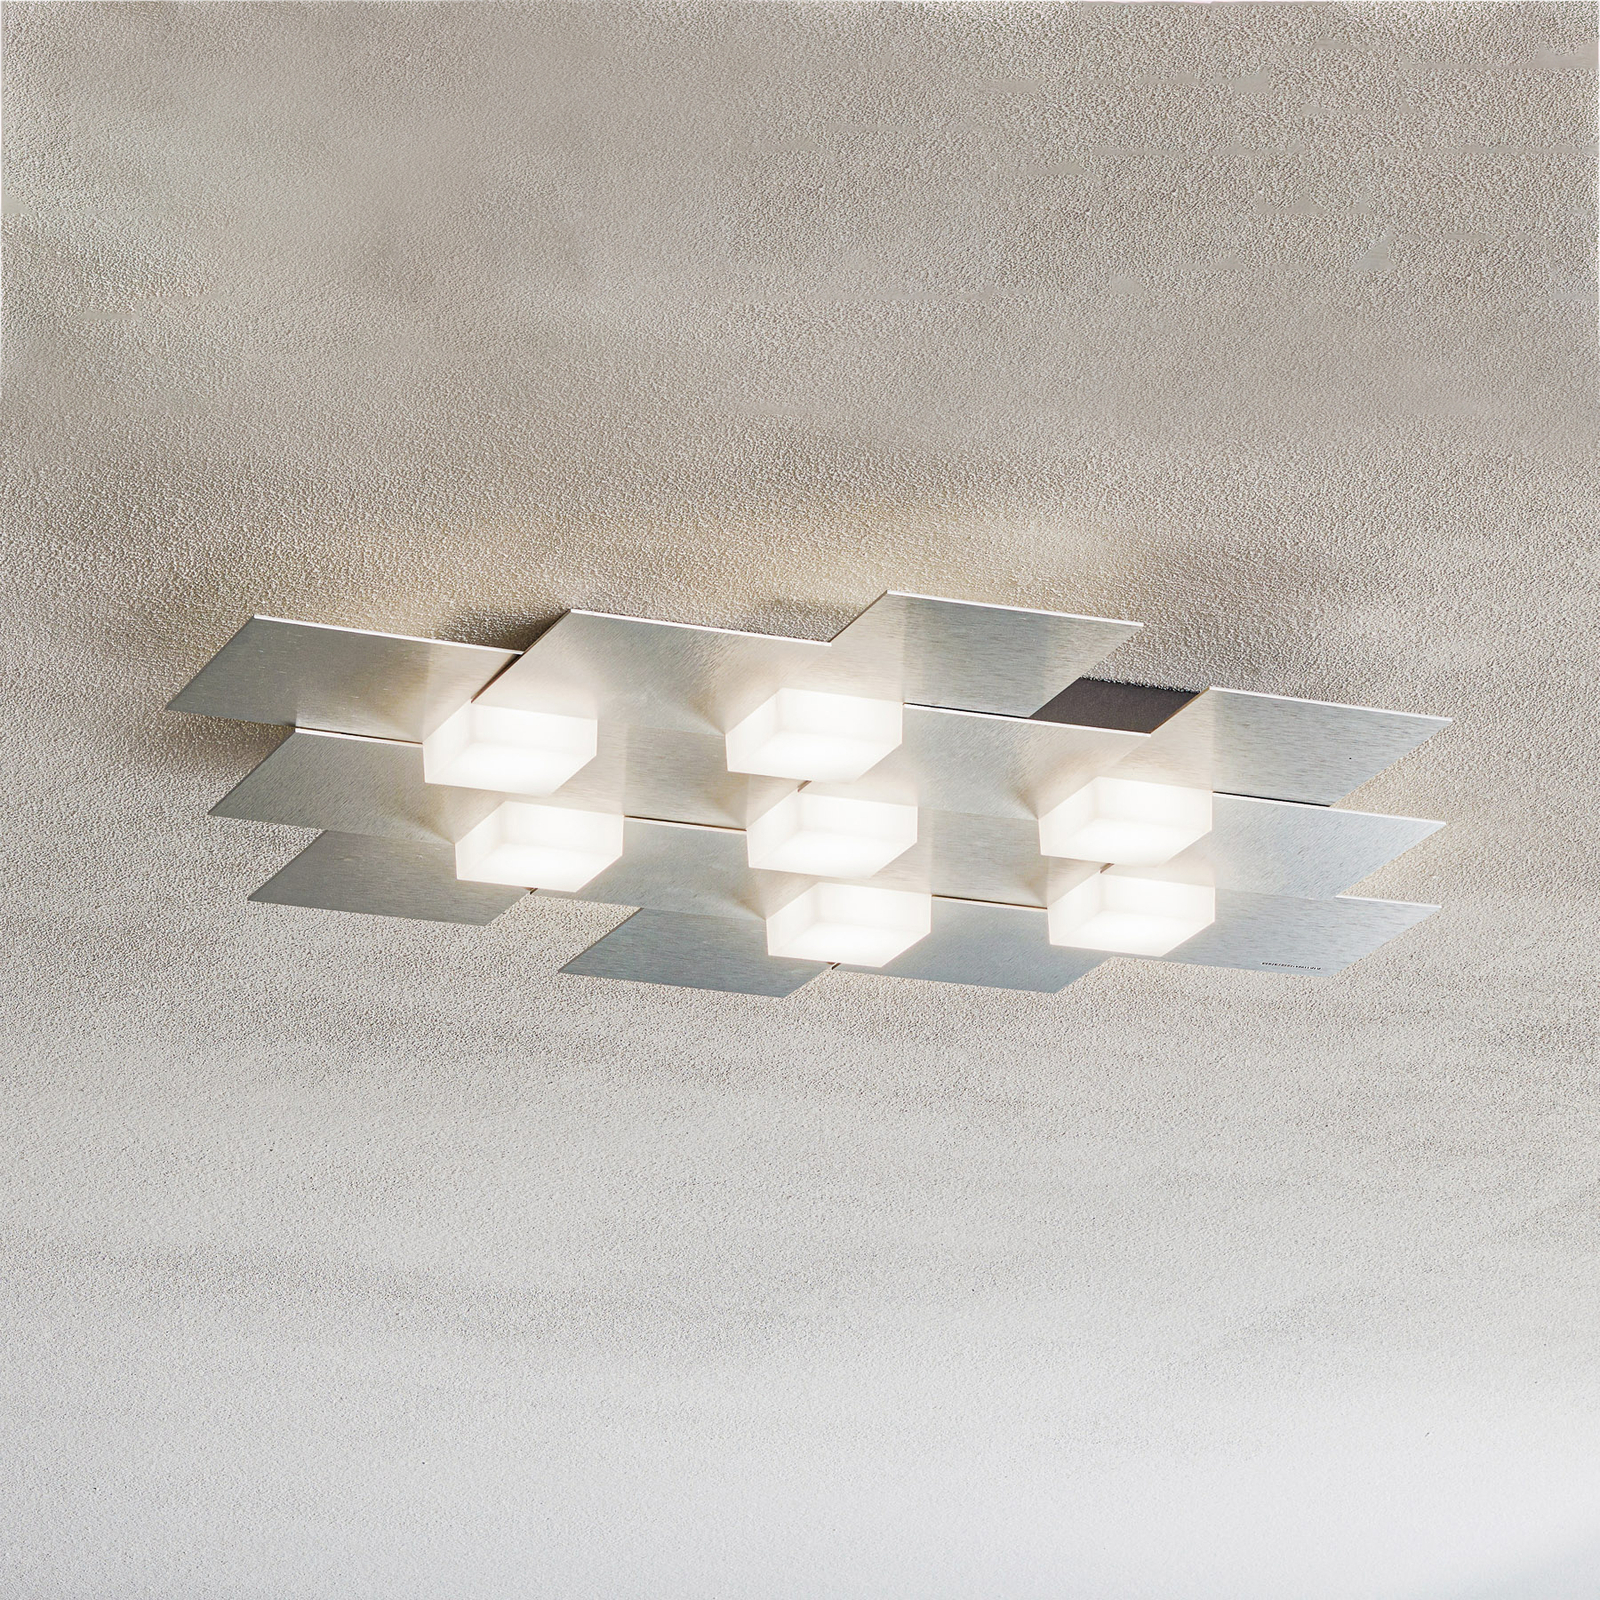 Stof Fabel overdracht GROSSMANN Creo LED plafondlamp, 7lamps | Lampen24.be